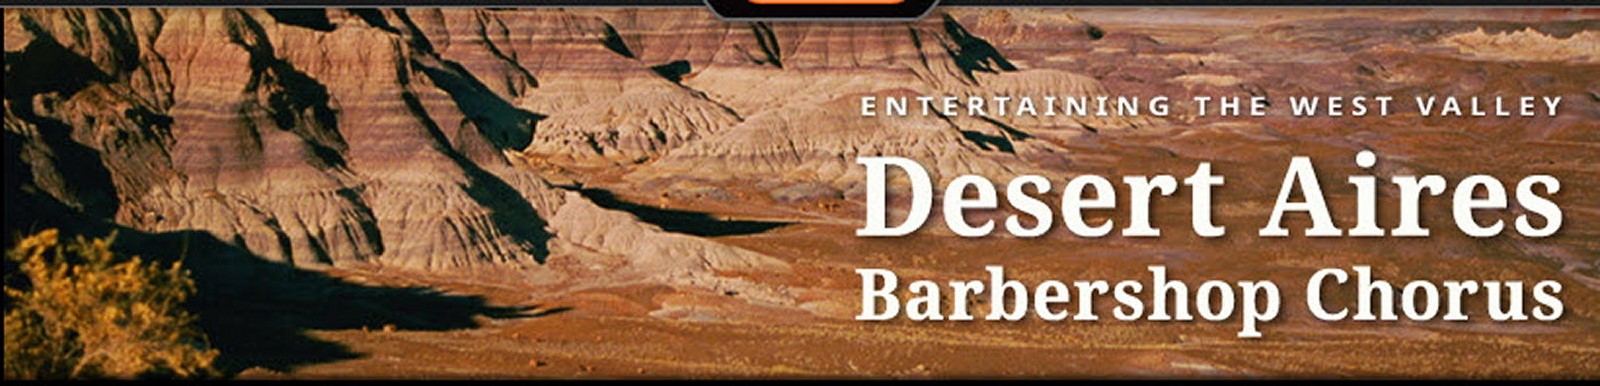 DESERT AIRES MEN'S A'CAPPELLA CHORUS  (A Champion Barbershop Chorus) logo